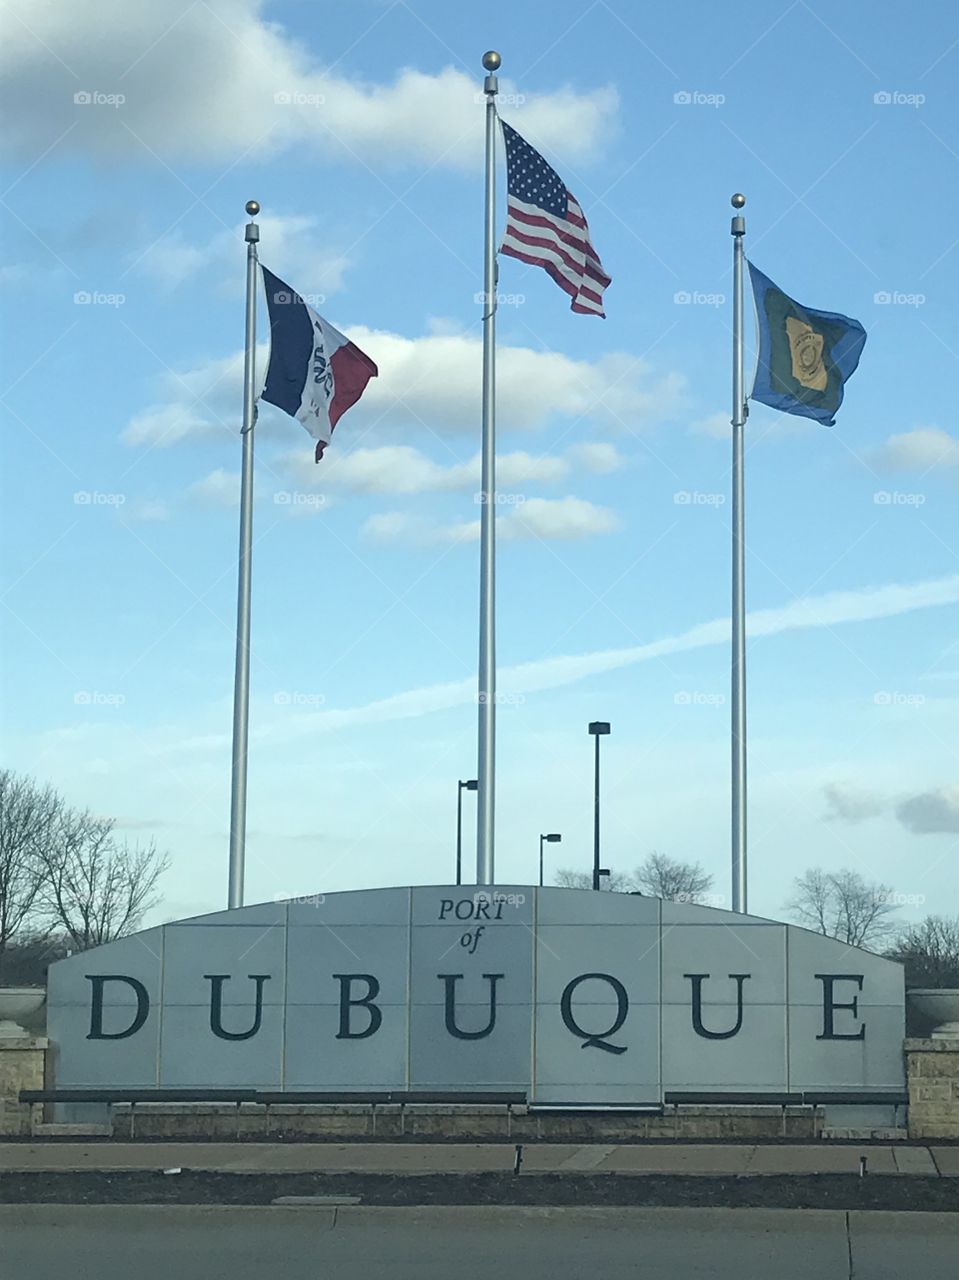 Dubuque, Iowa